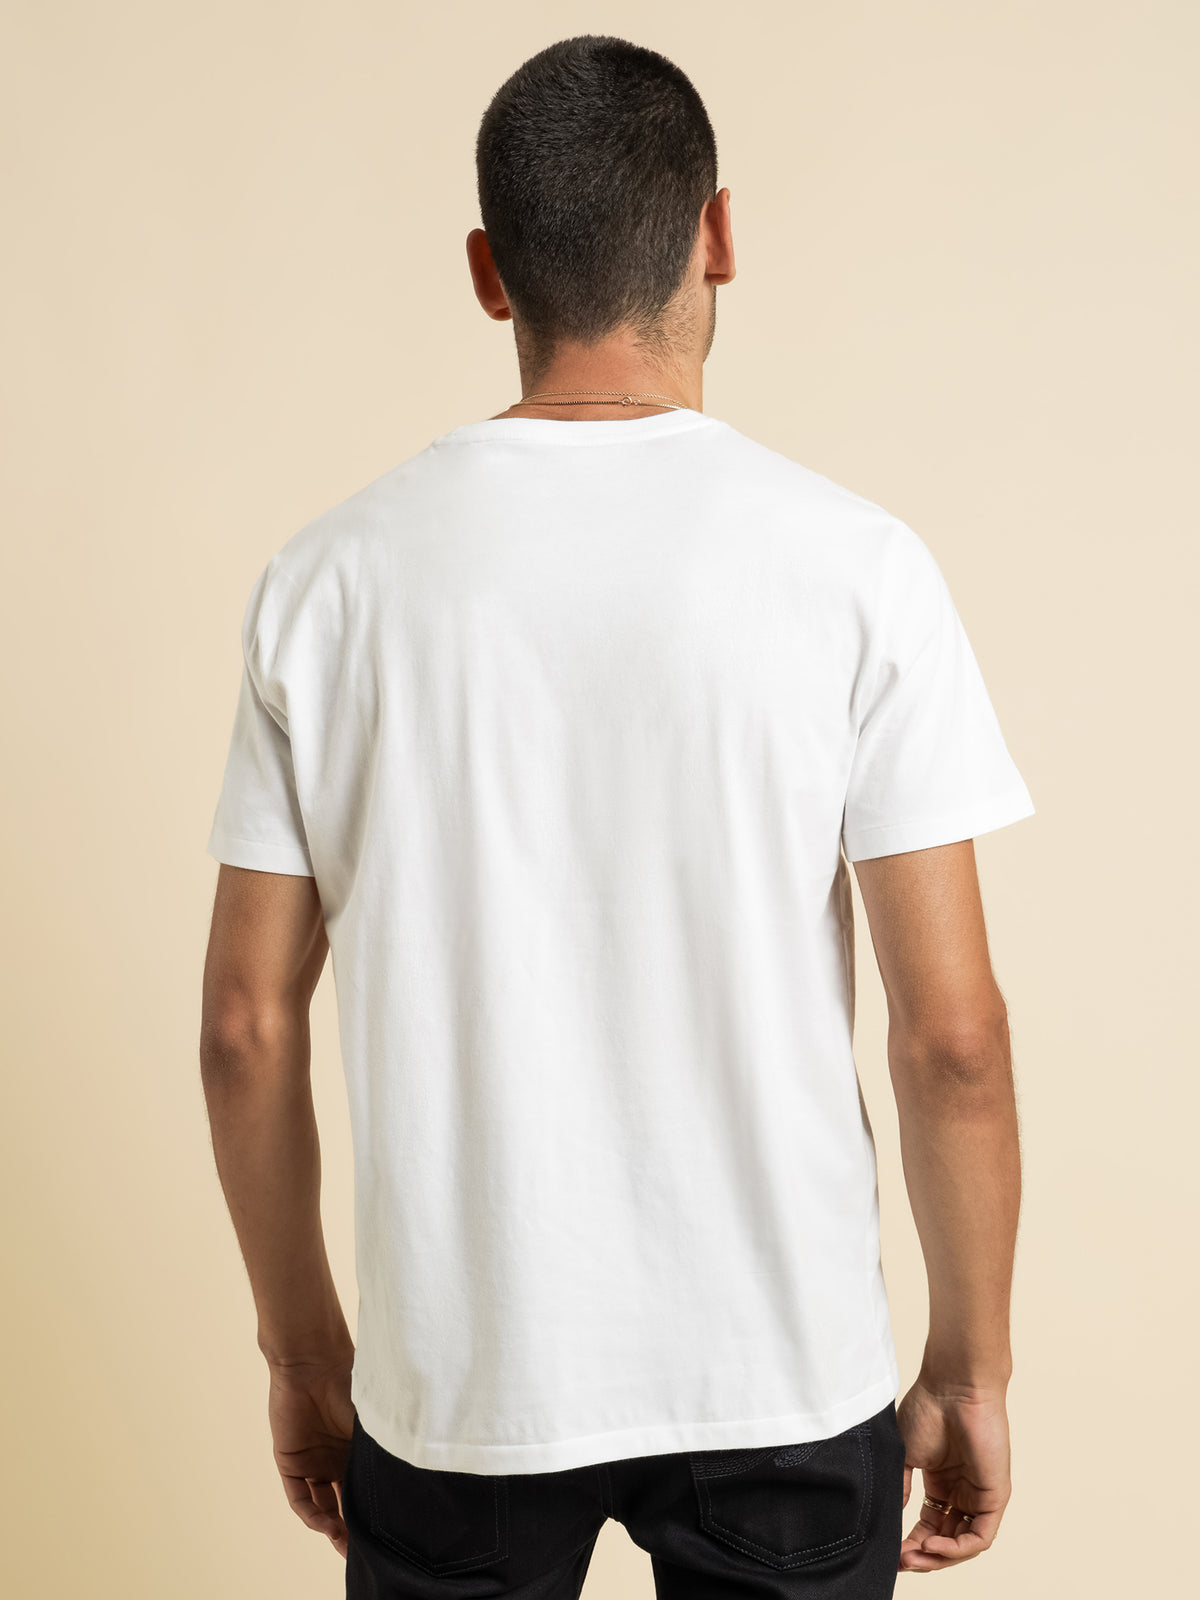 Custom Slim Fit Shirt in White